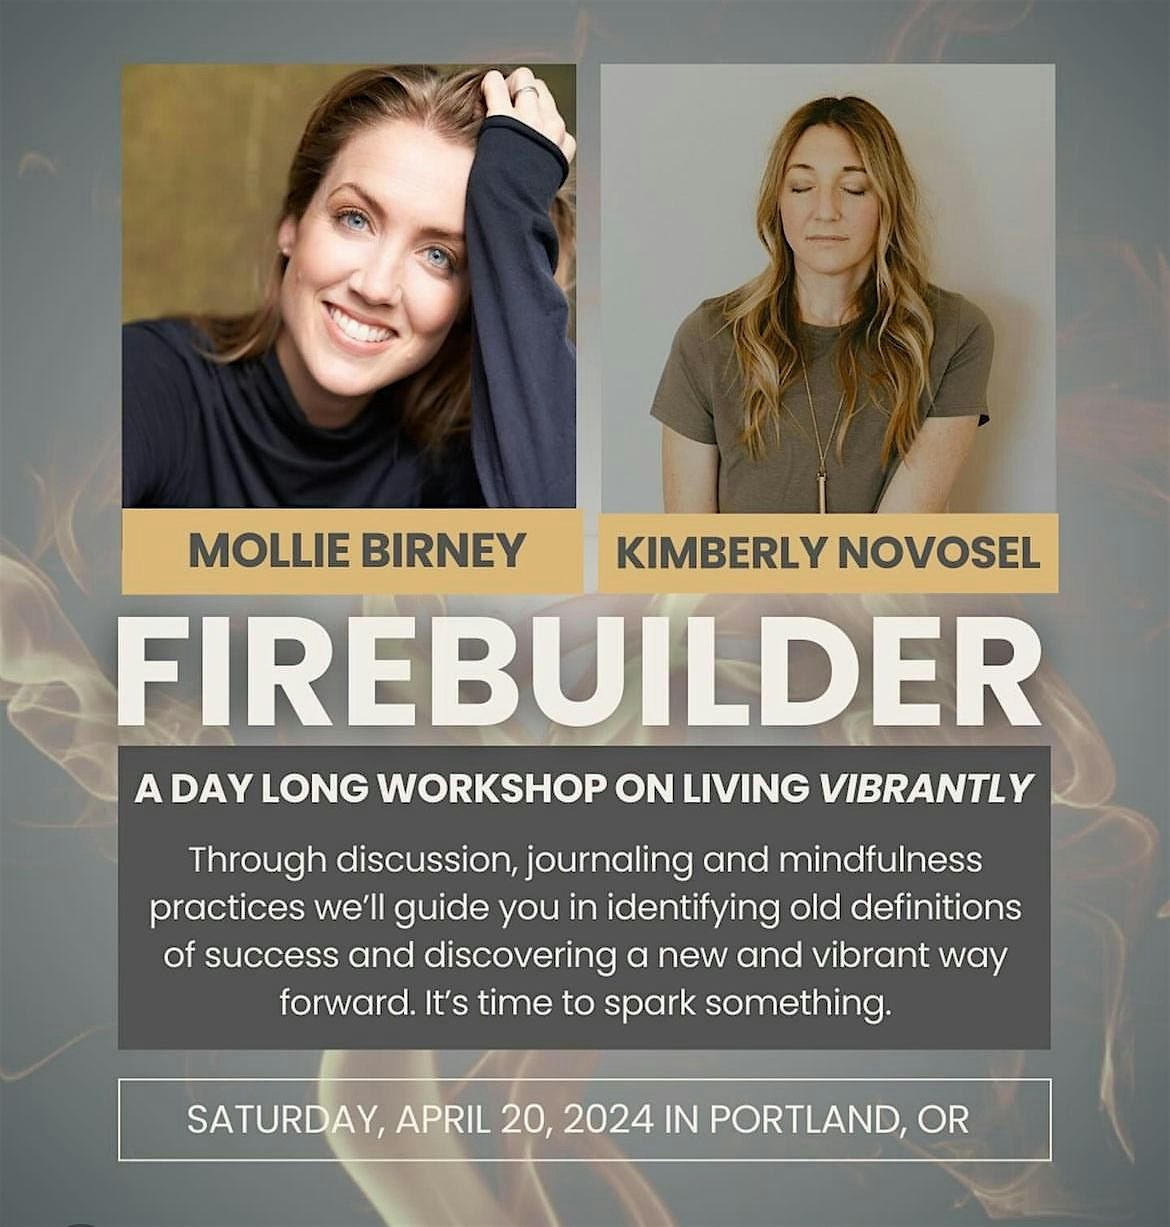 Firebuilder - a day-long workshop on living vibrantly!